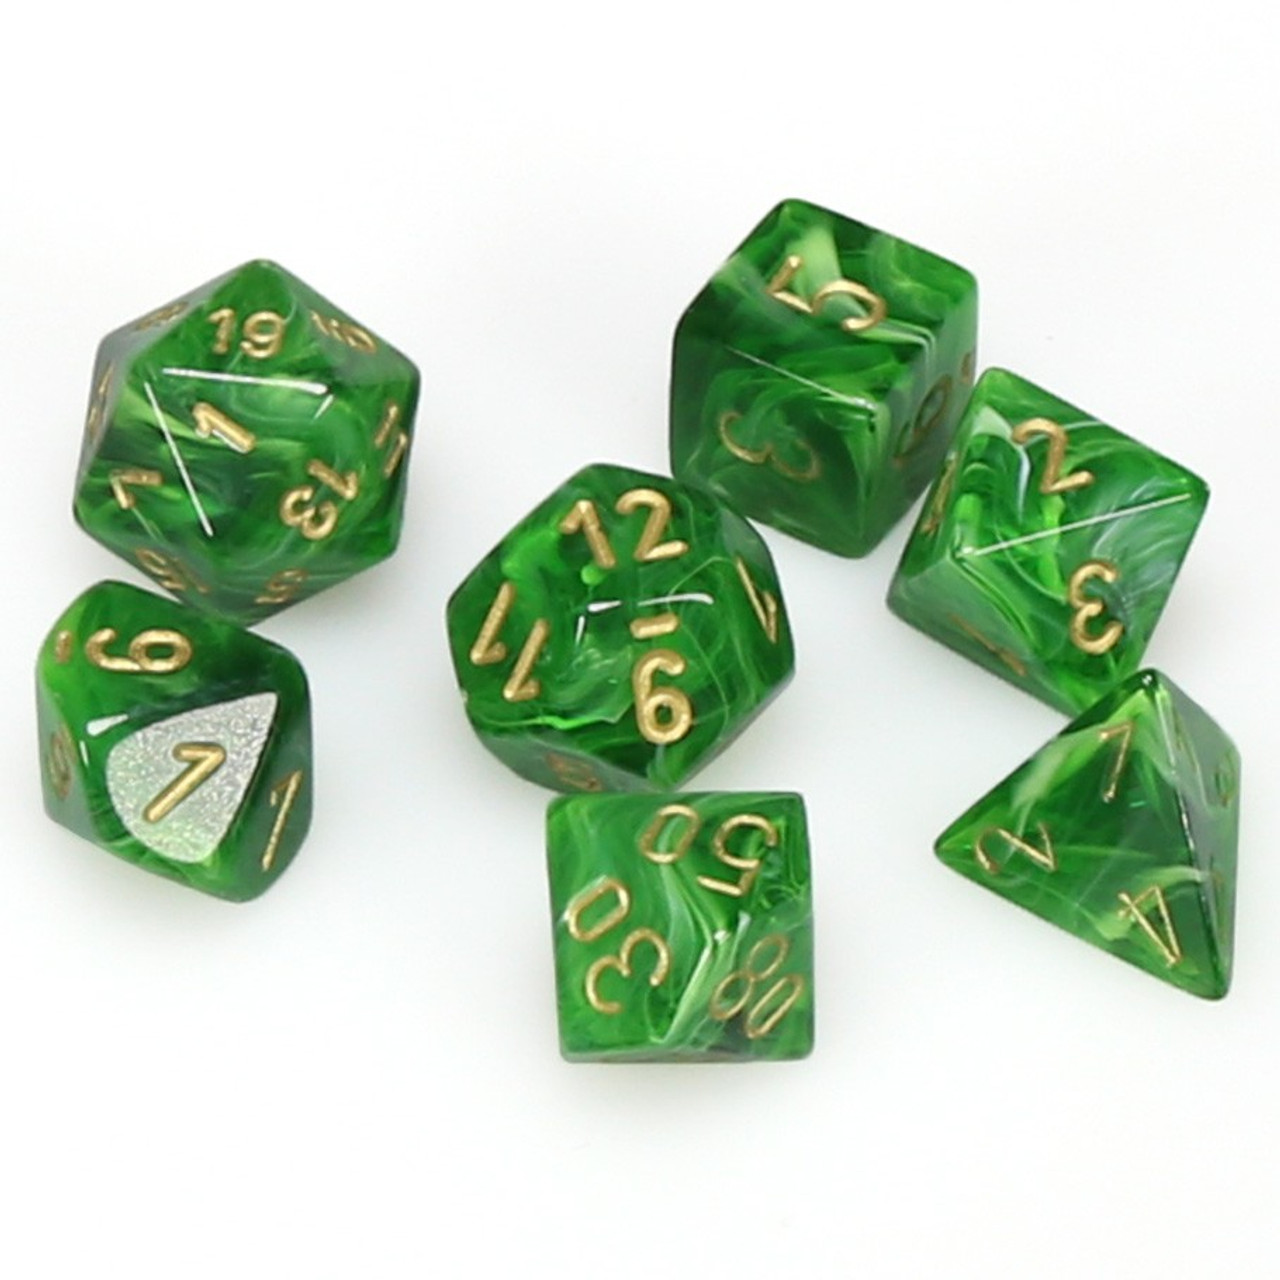 7 Die Dice Polyhedral Set Chessex Vortex Bright Green With Black for sale online 